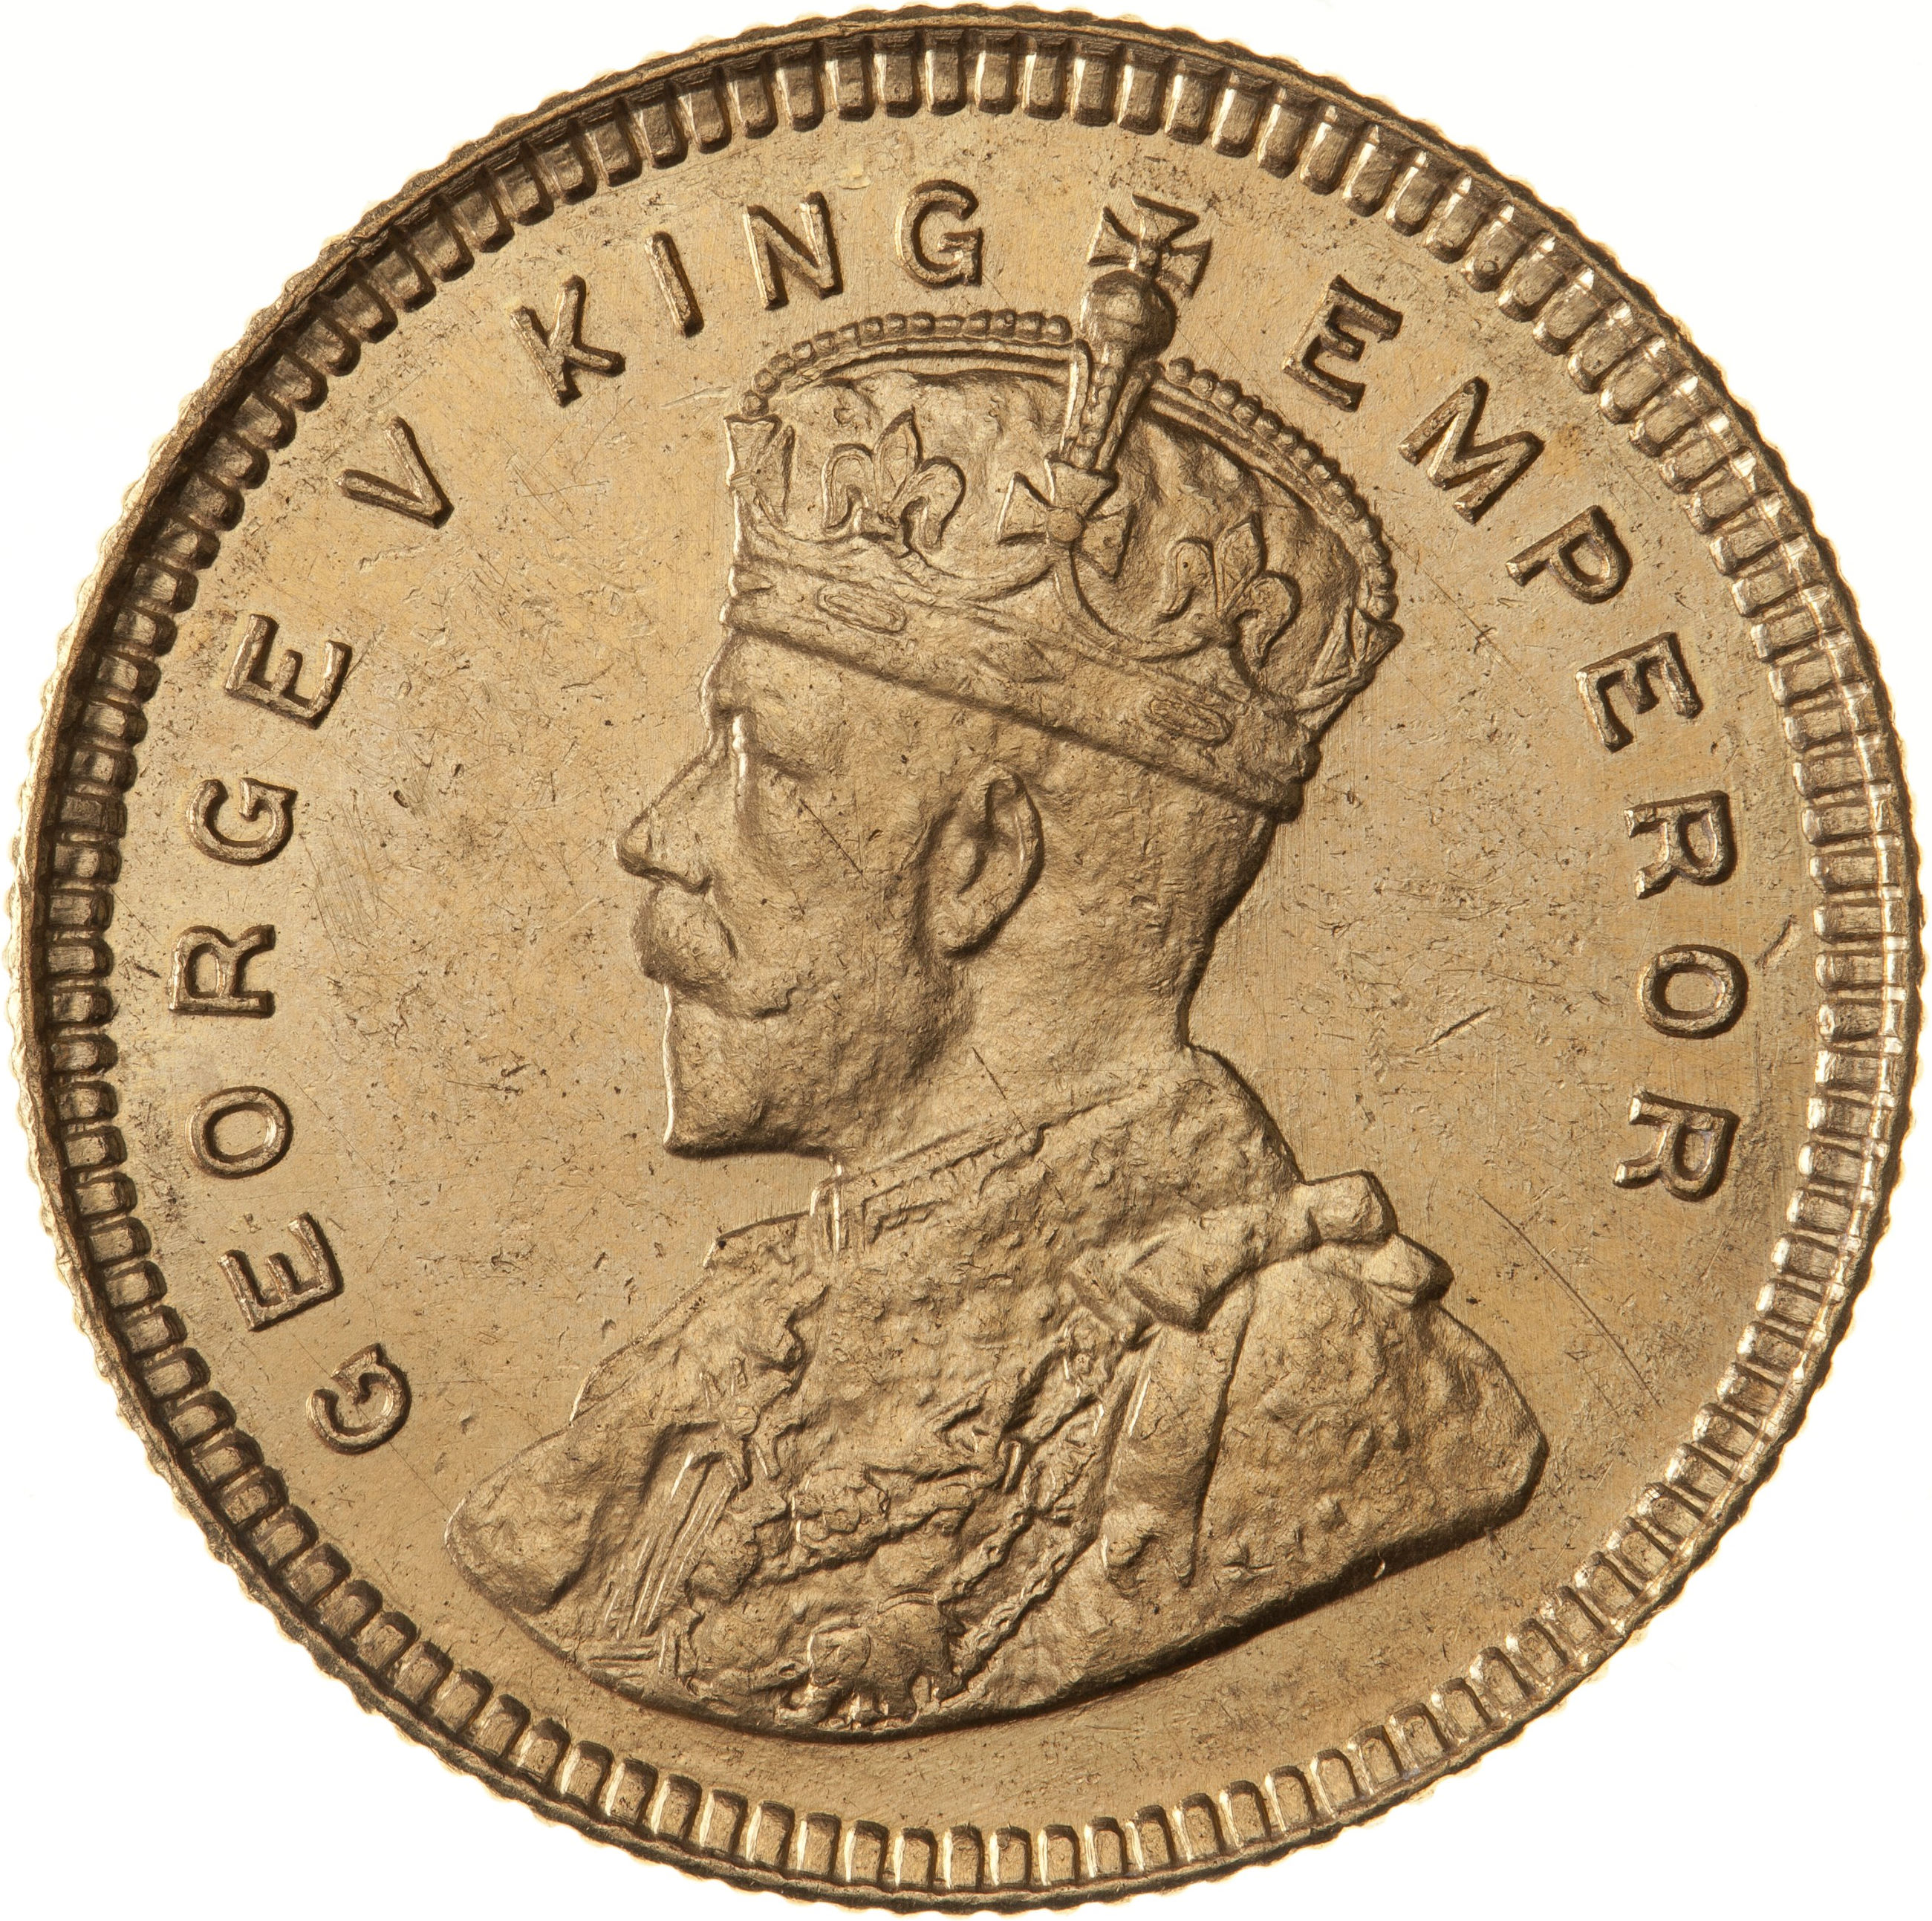 1918 15 rupees obverse